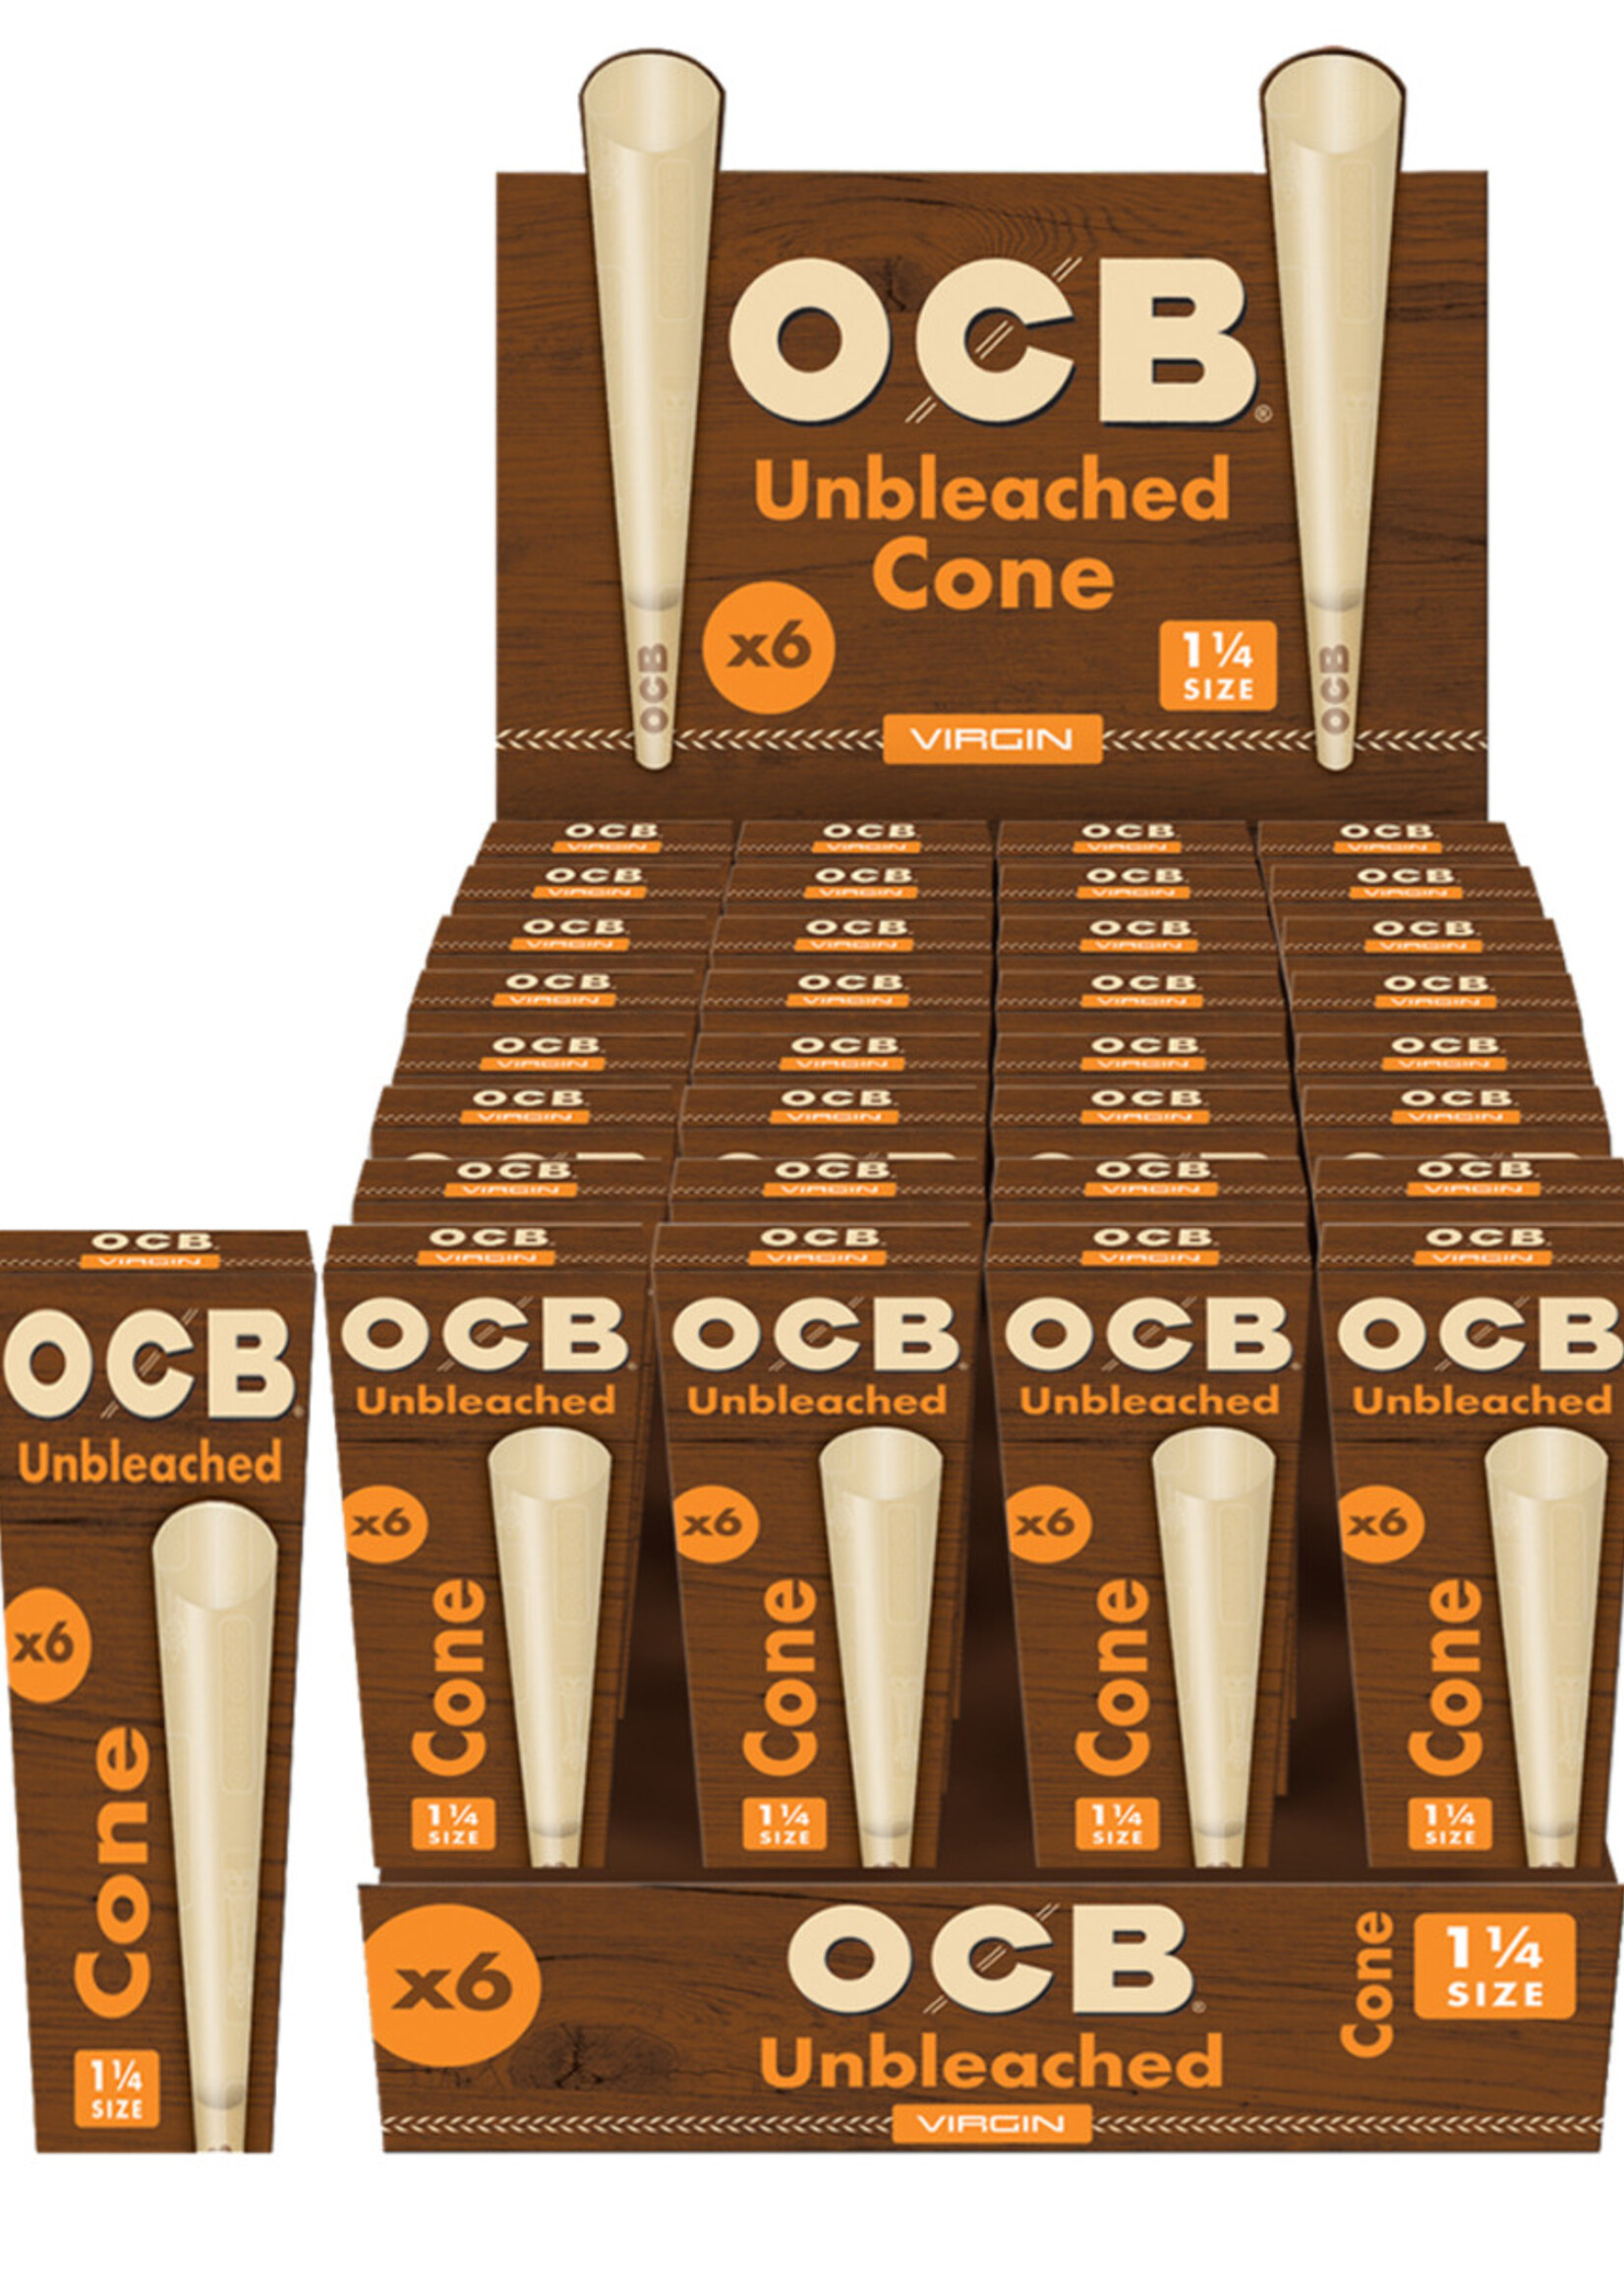 OCB OCB Unbleached Cones - 1 1/4 x 6